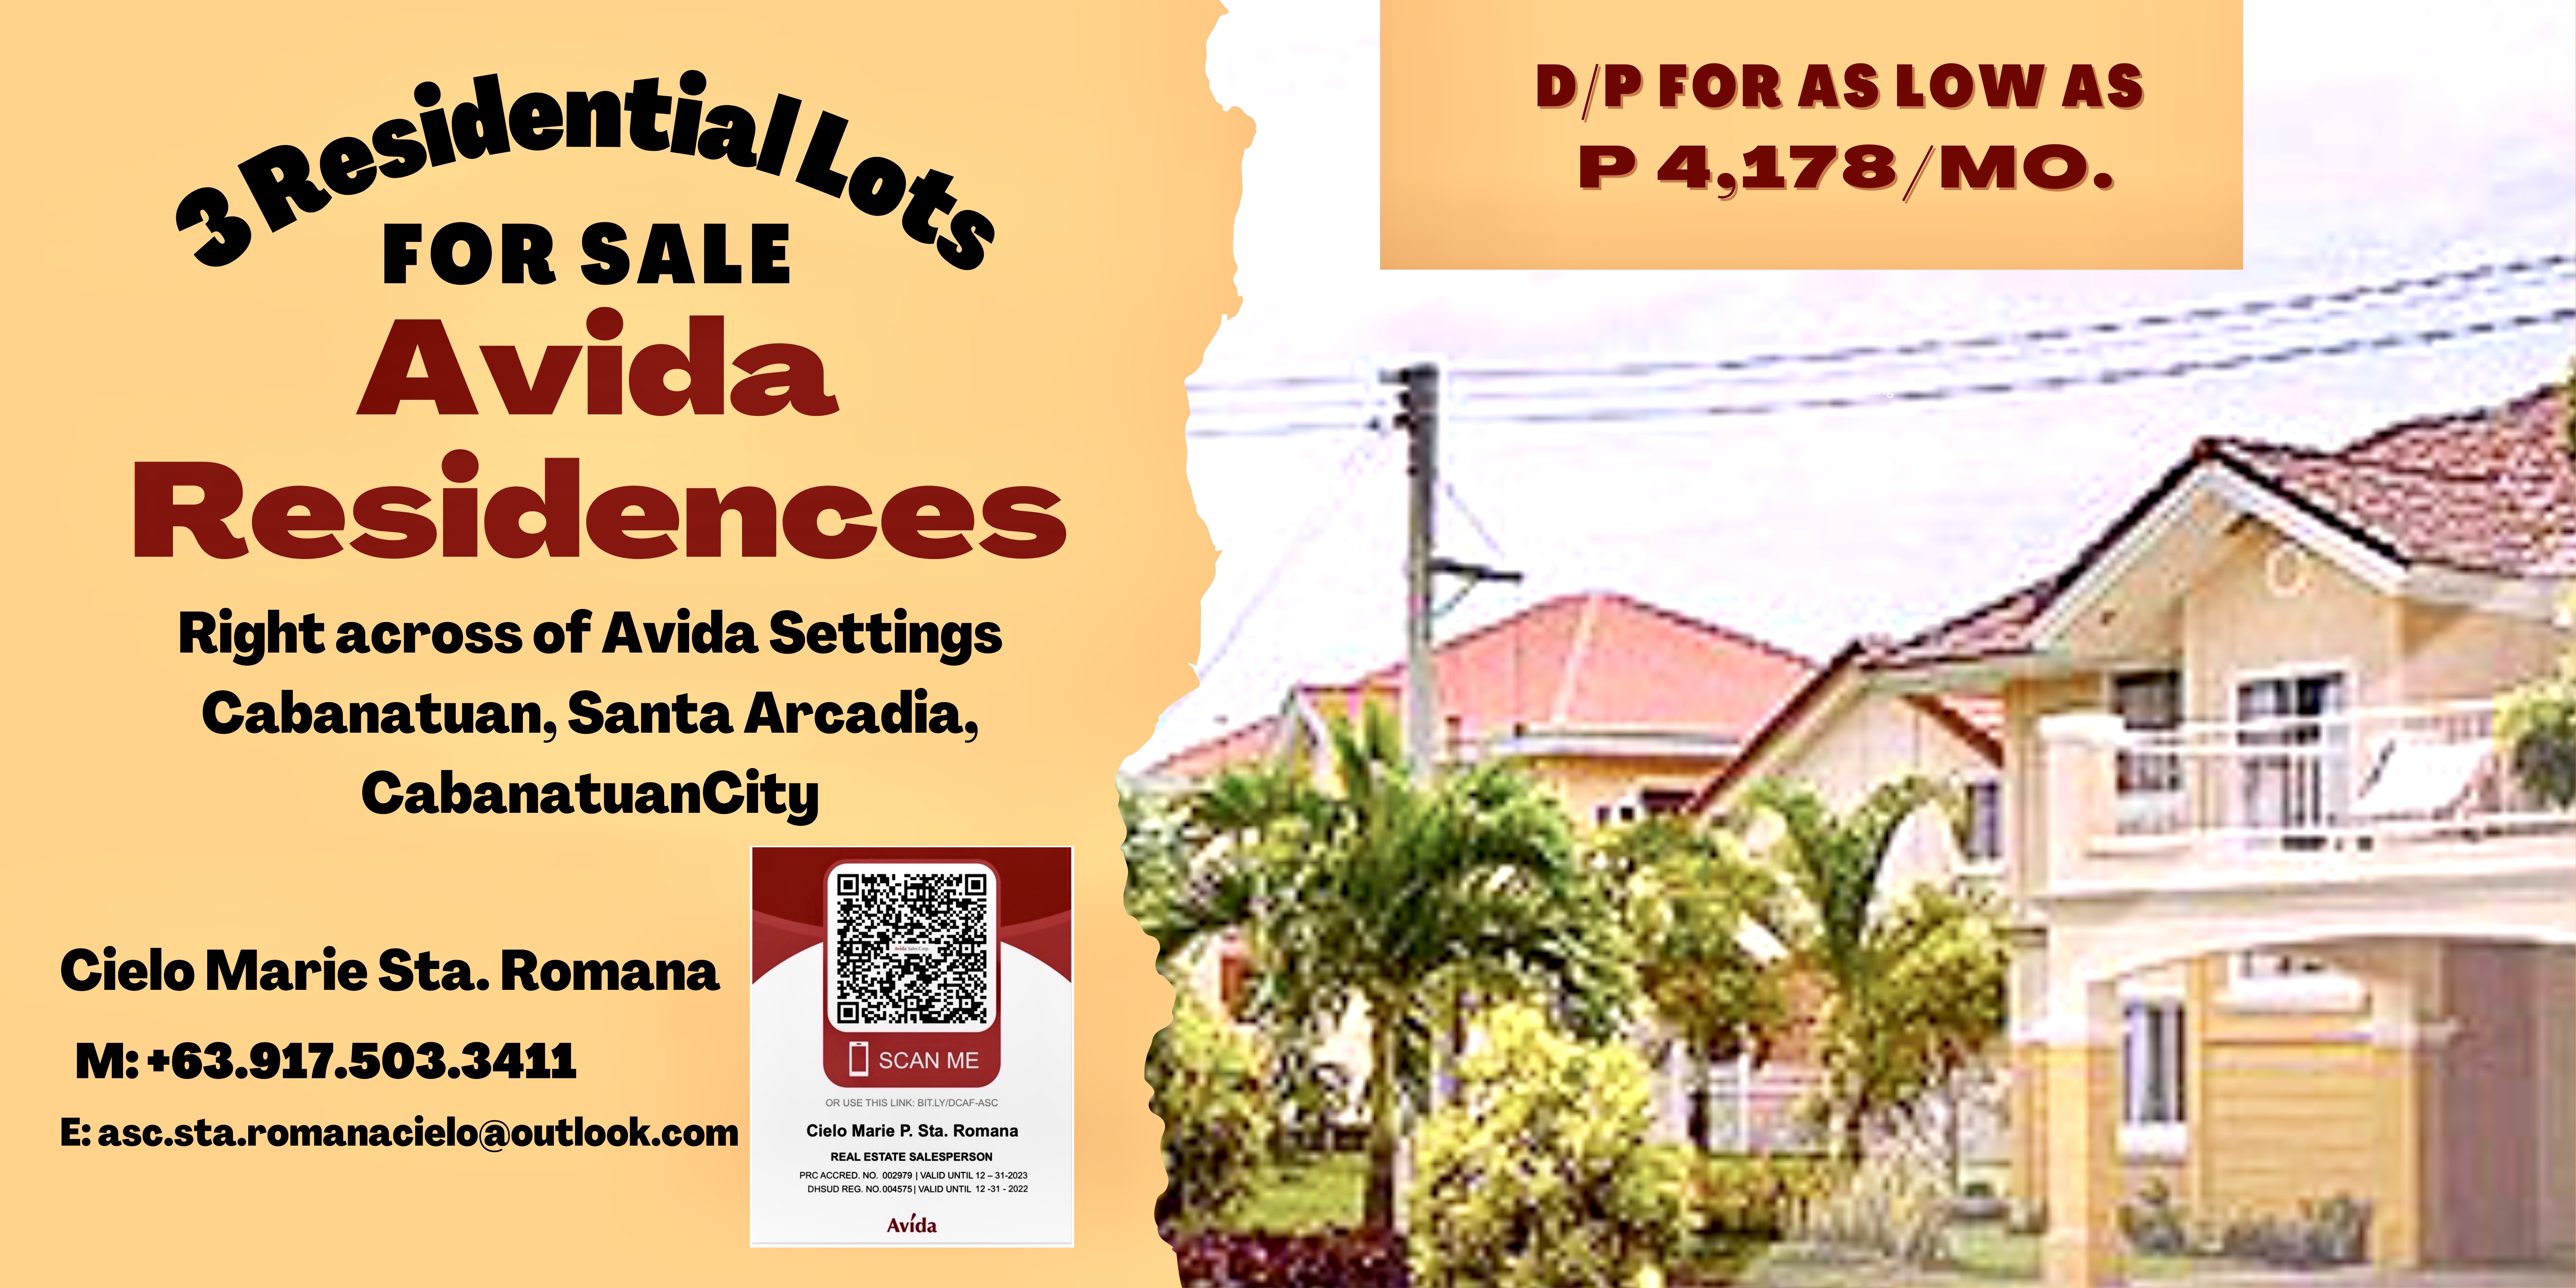 Residential Lots in Avida Residences, Cabanatuan